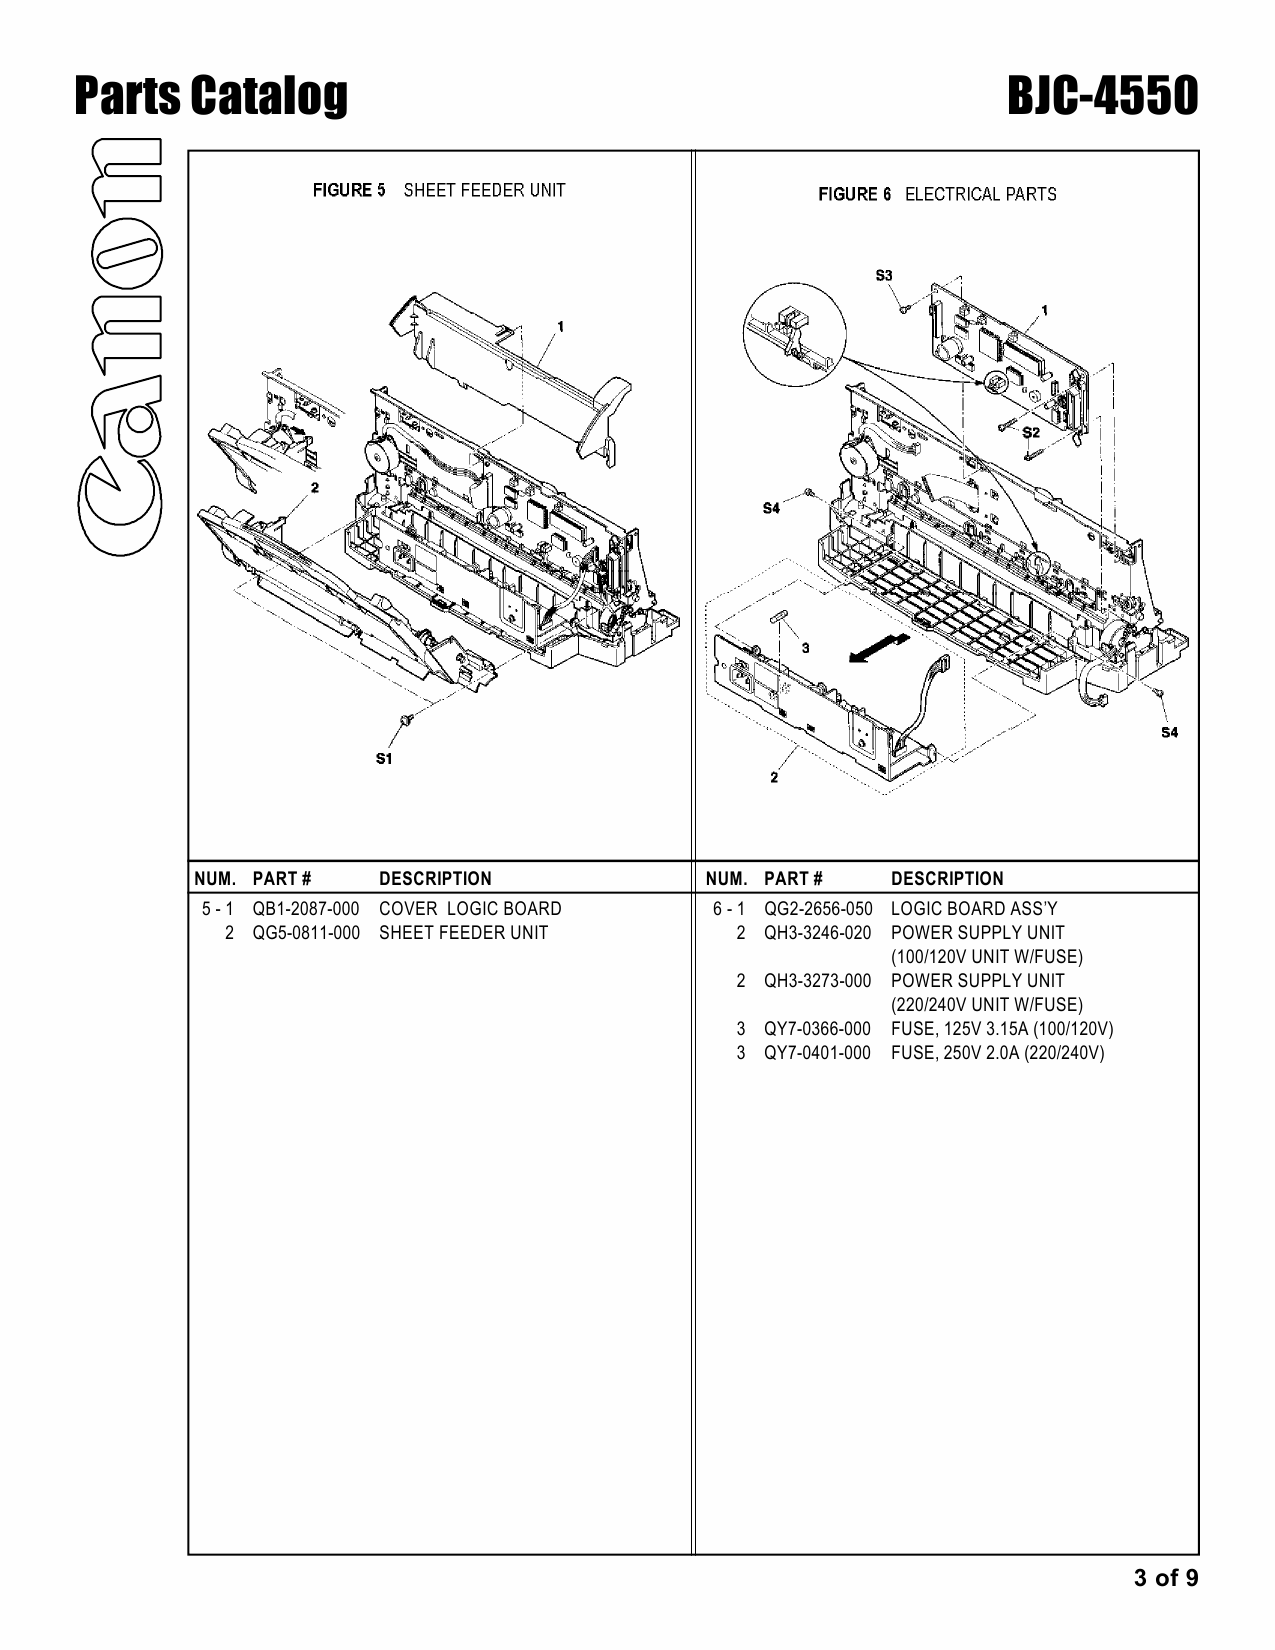 Canon BubbleJet BJC-4550 Parts Catalog Manual-3